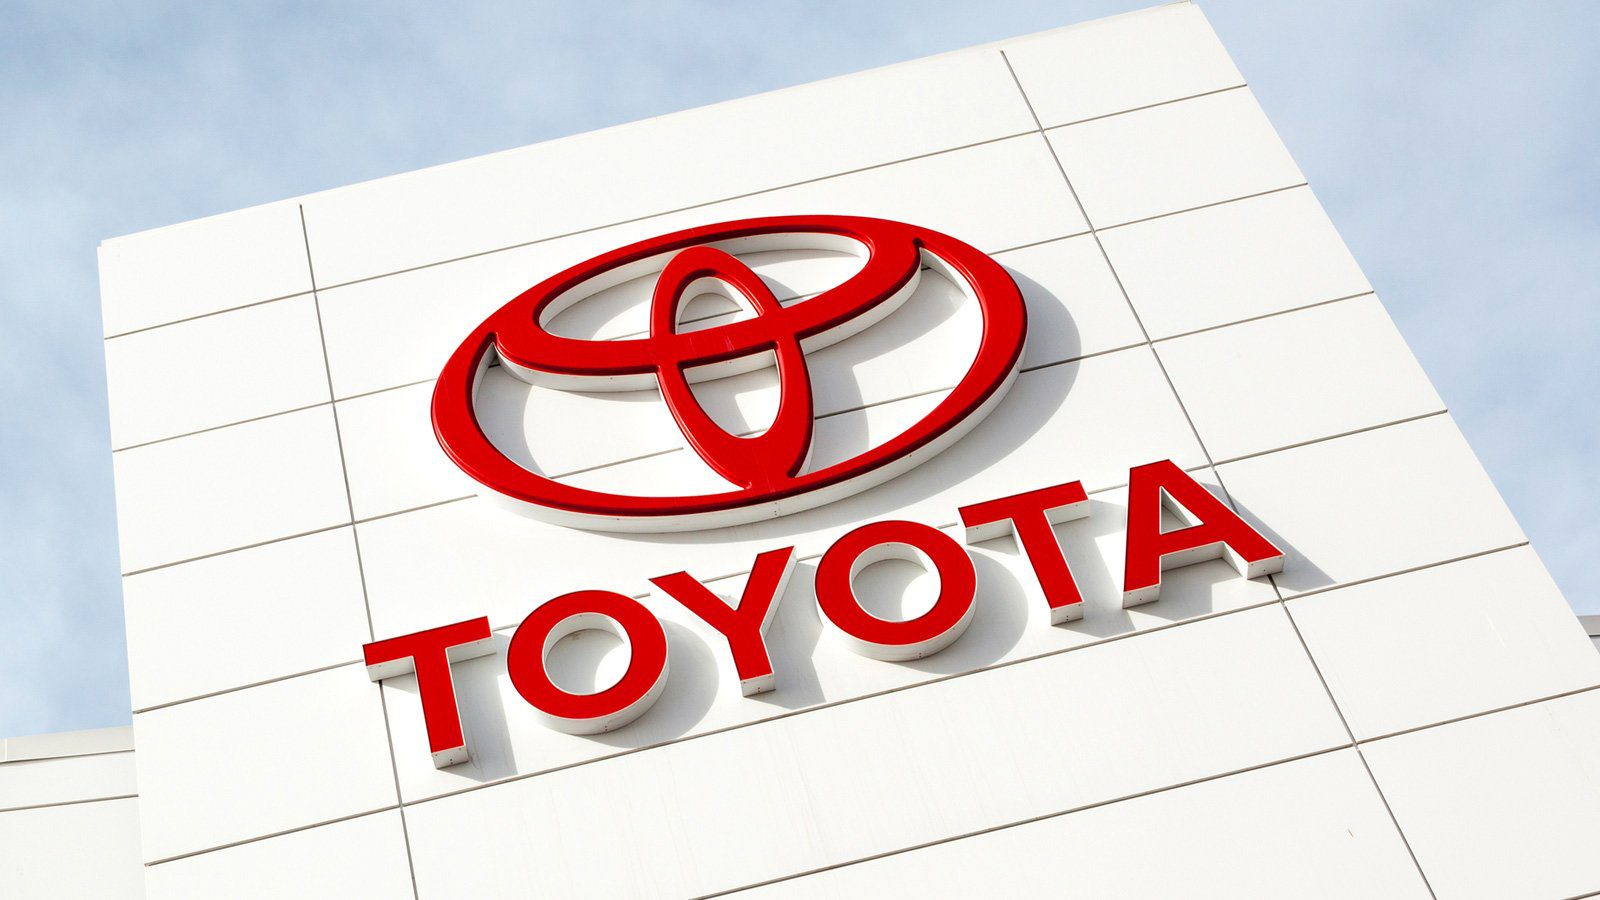 Toyota finds more misconfigured servers leaking customer info – Source: www.bleepingcomputer.com